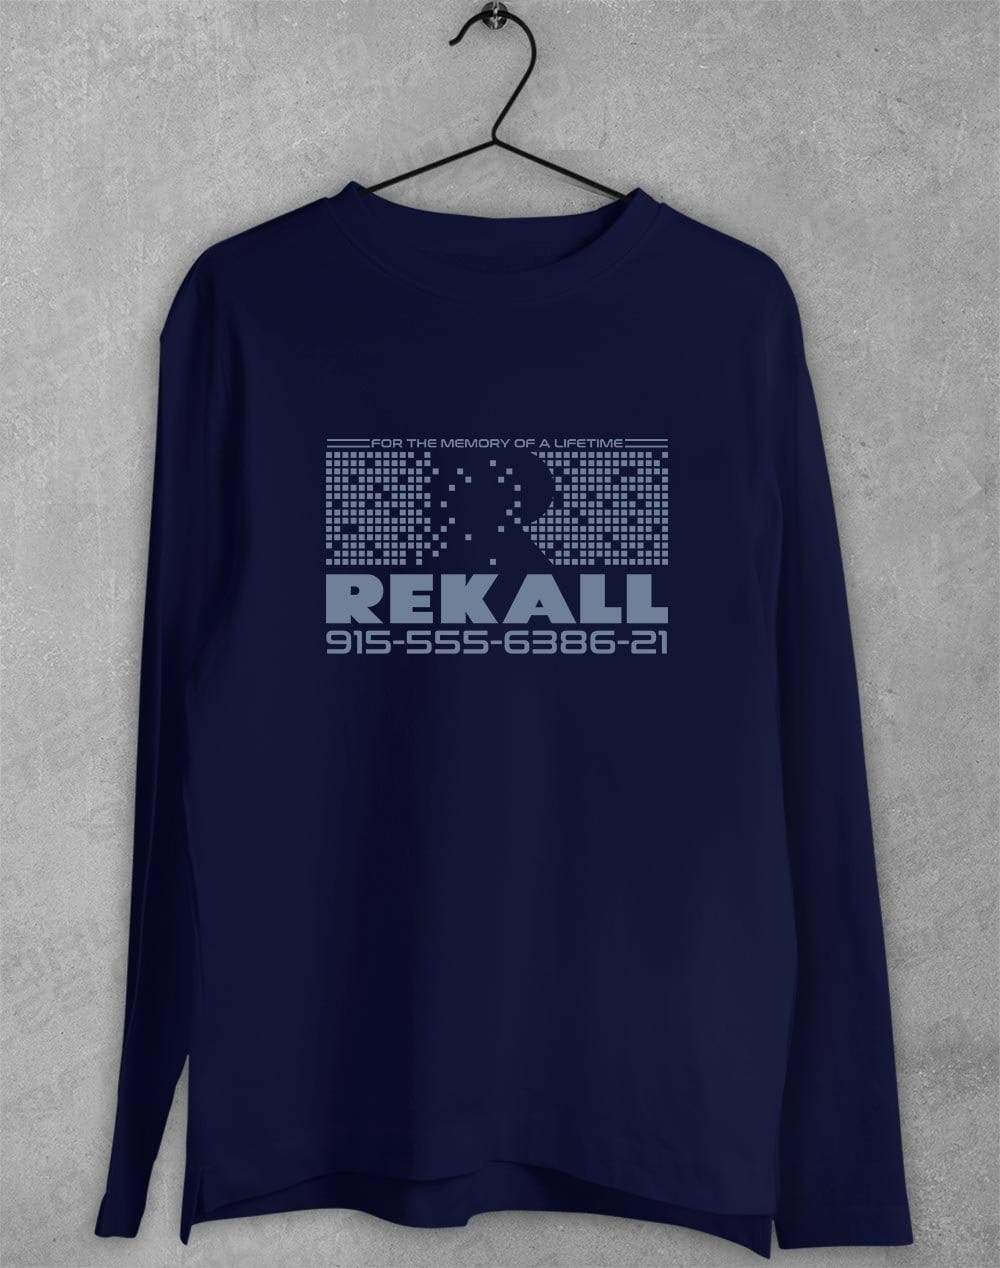 Rekall Long Sleeve T-Shirt S / Navy  - Off World Tees